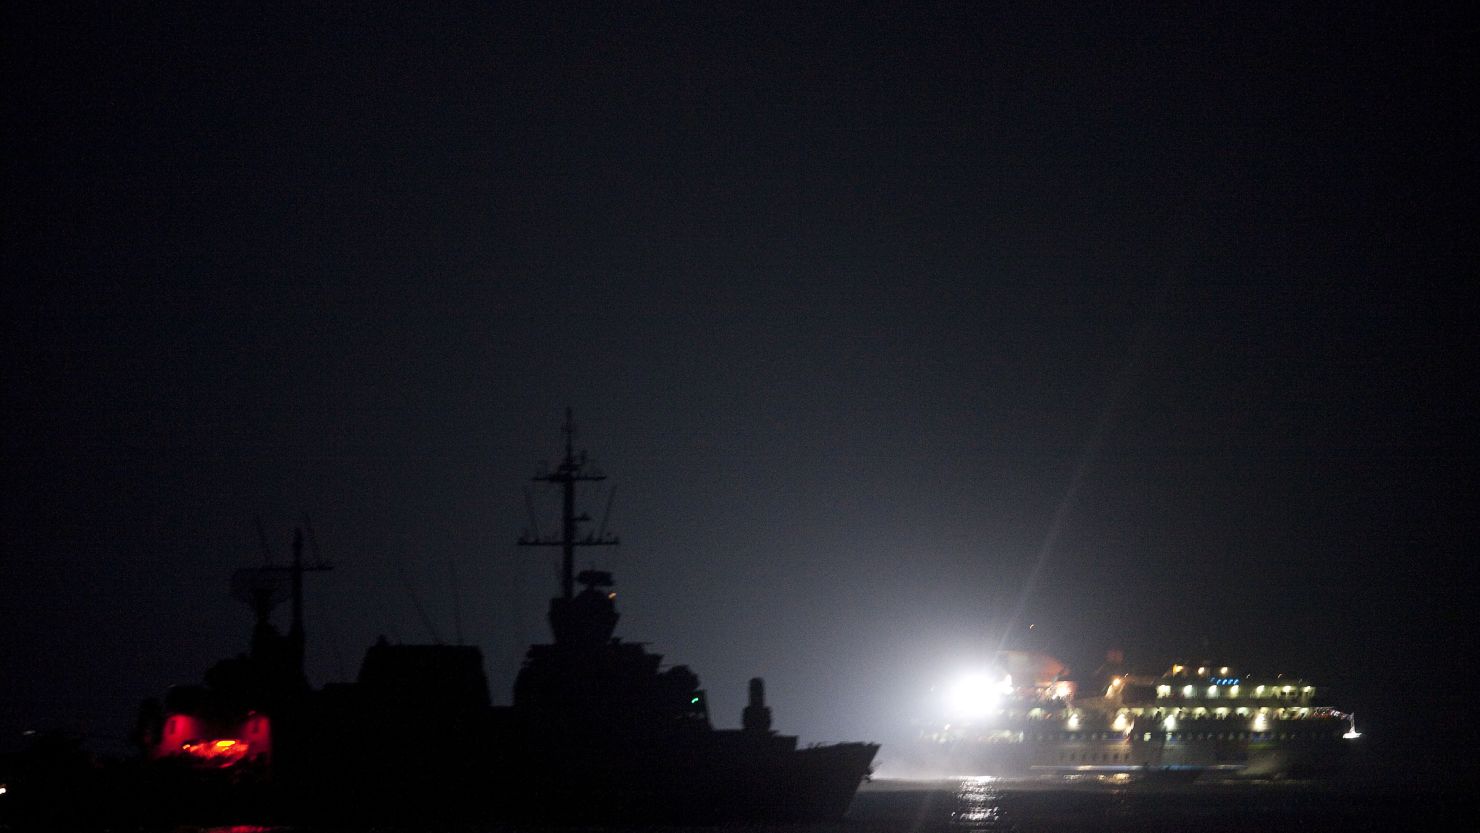 File photo: The Israeli navy intercepts a Gaza-bound aid flotilla in the Mediterranean Sea on May 31, 2010.